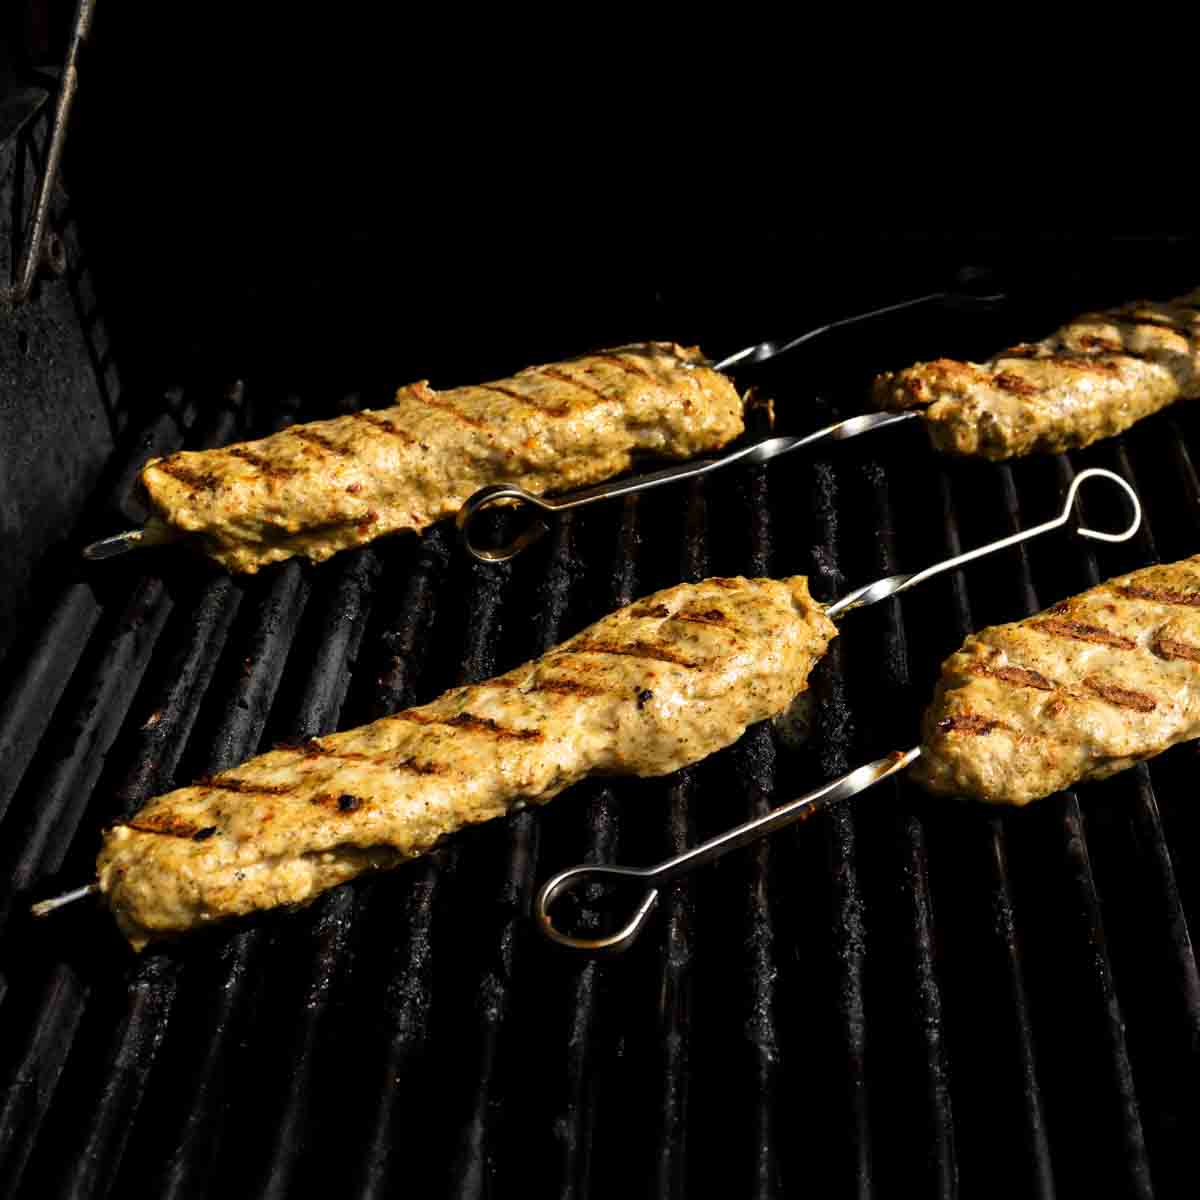 Chicken kofta kebabs on the grill.